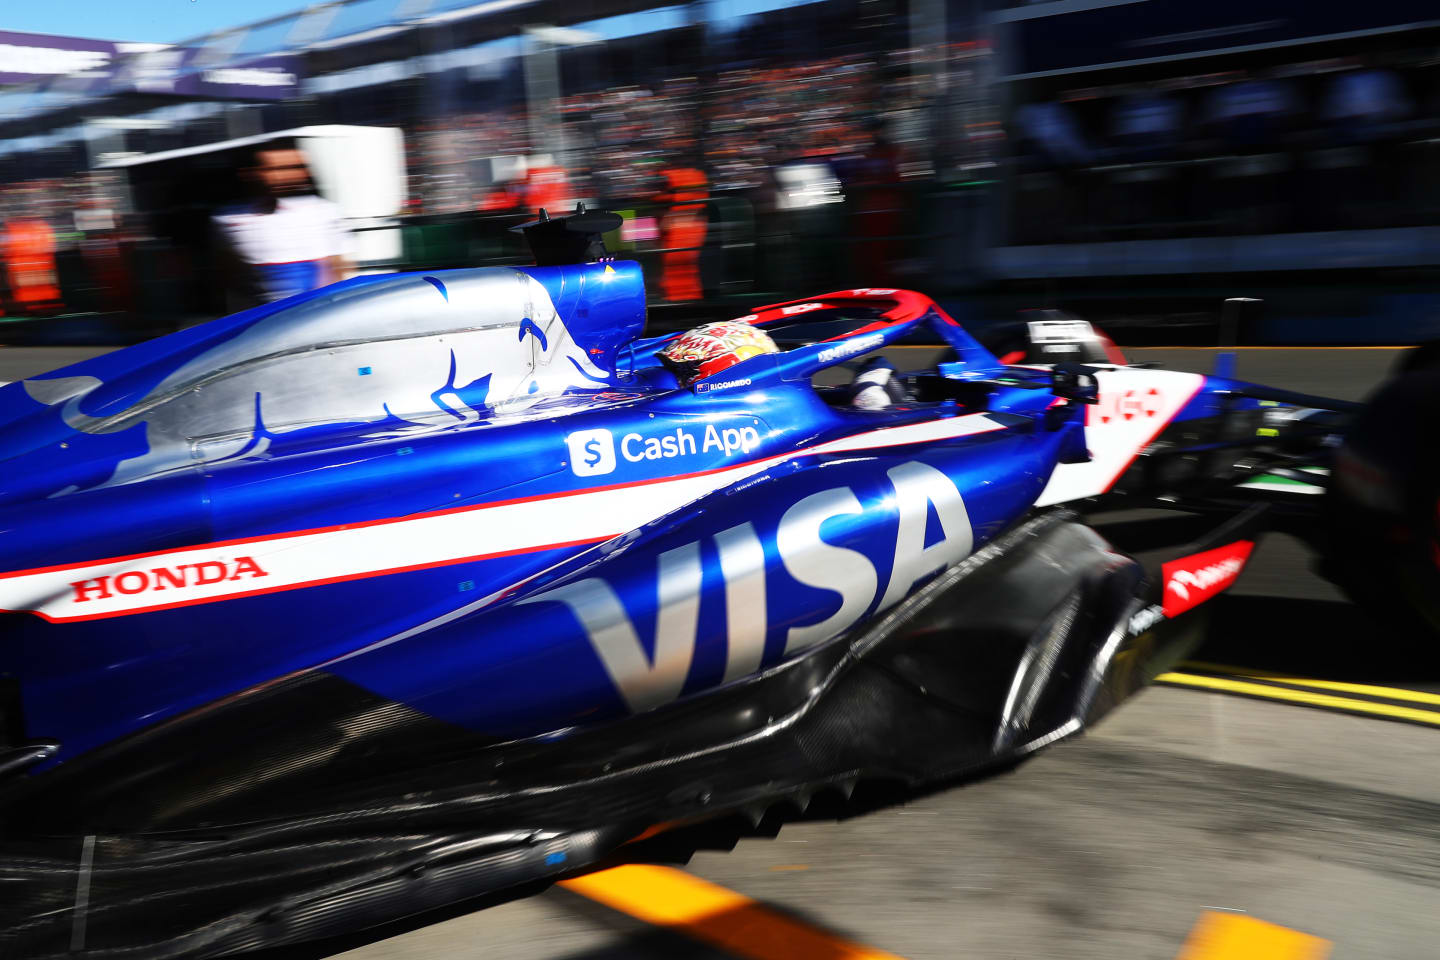 MELBOURNE, AUSTRALIA - MARCH 23: Daniel Ricciardo of Australia driving the (3) Visa Cash App RB